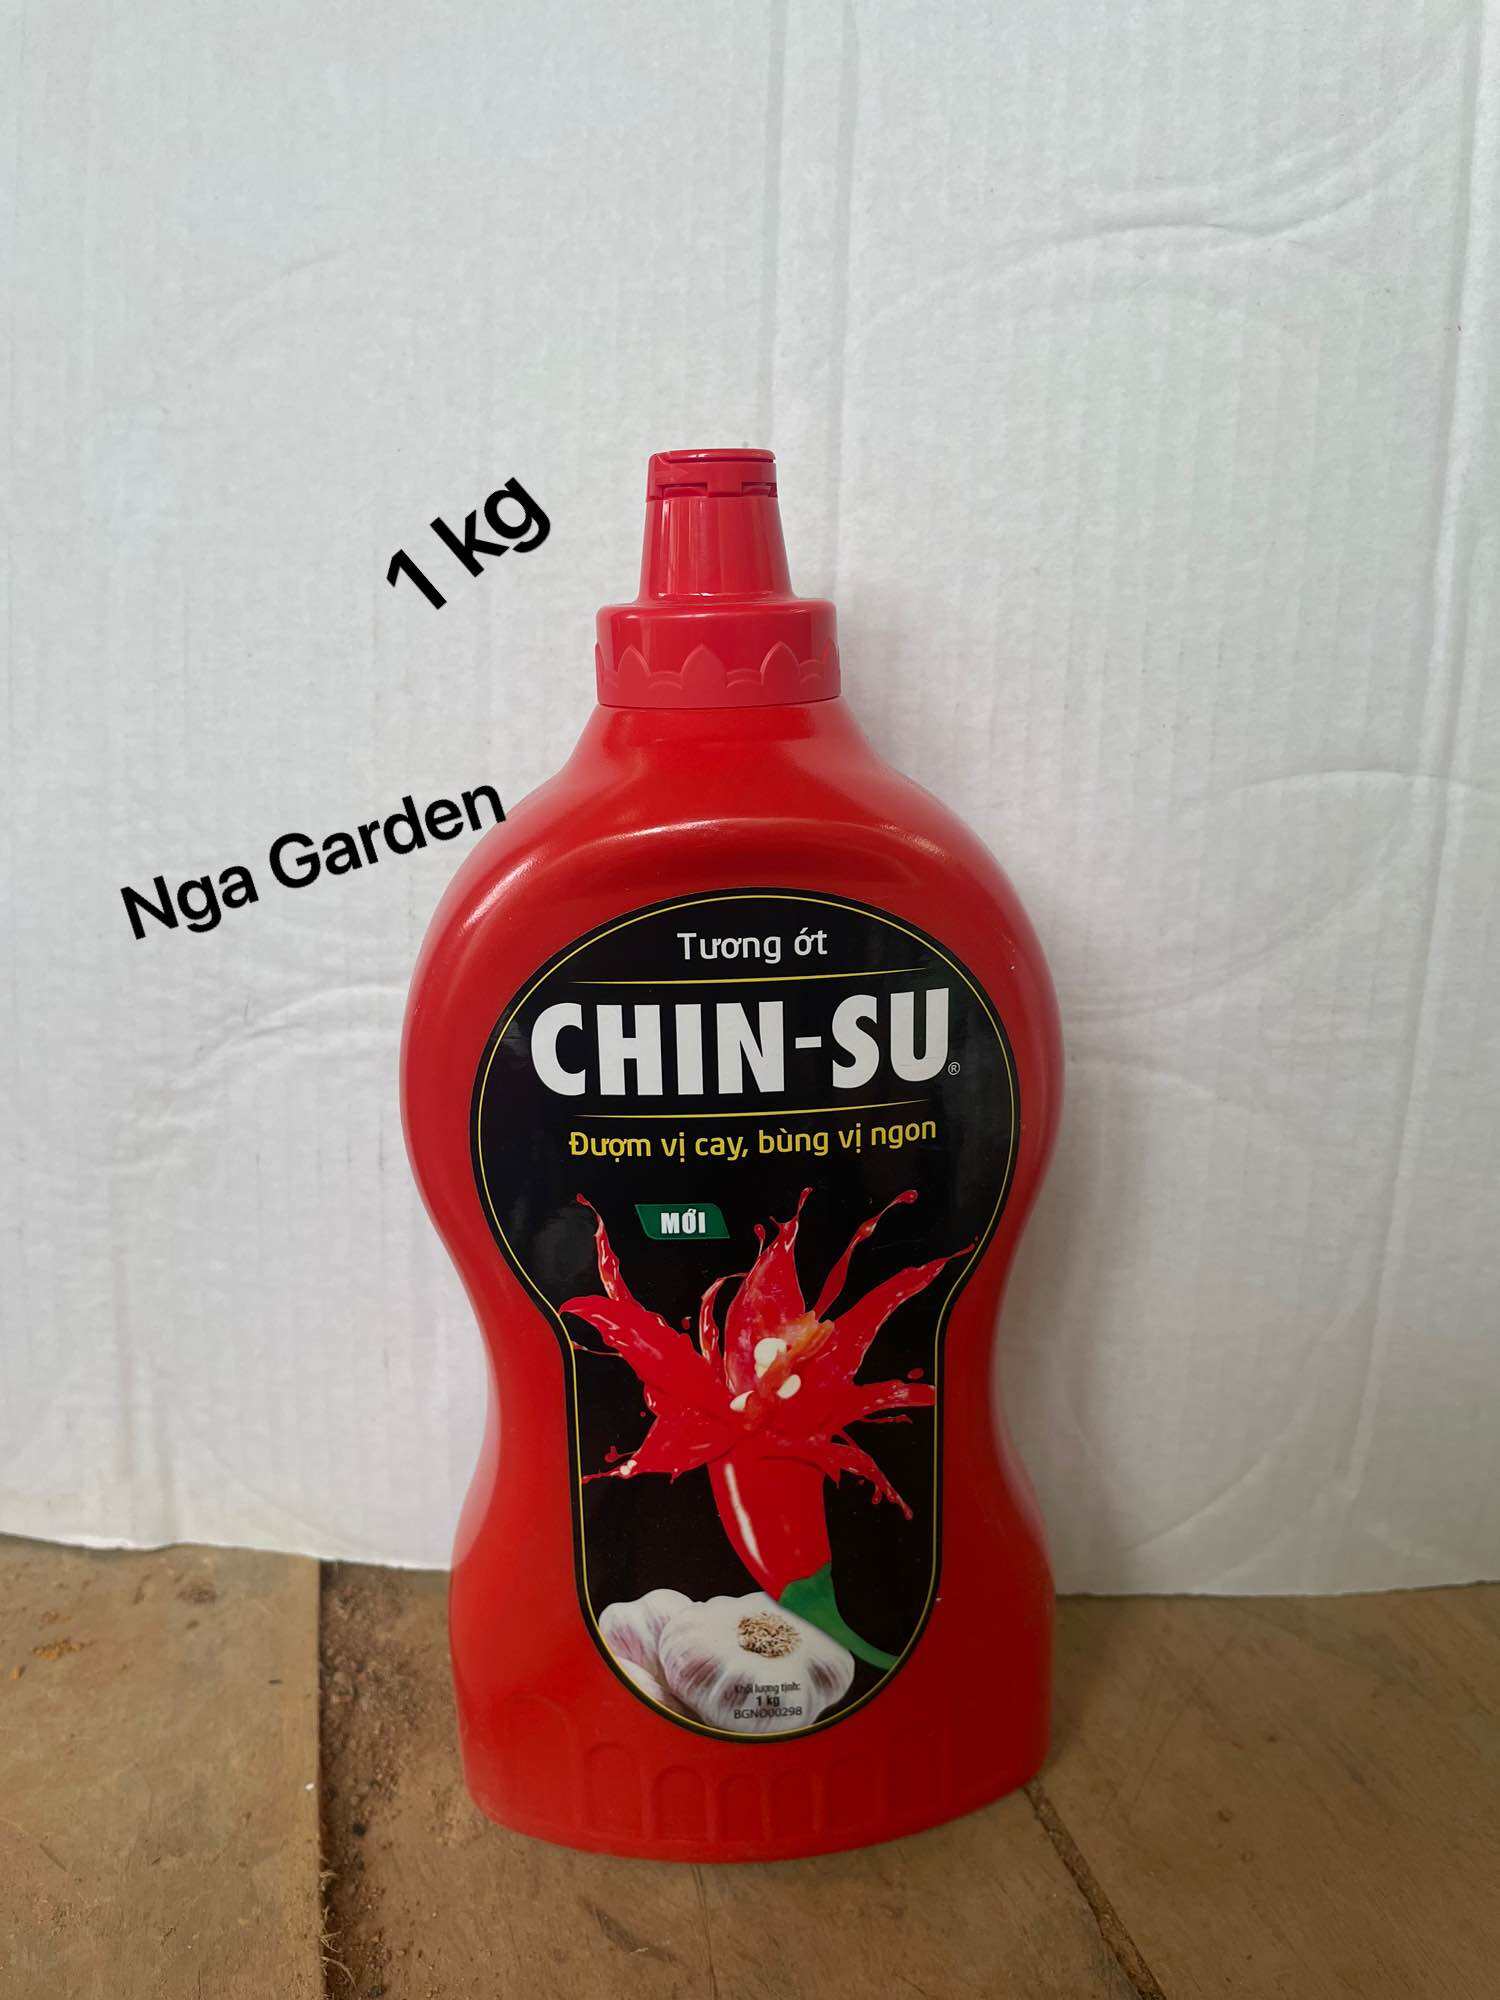 Tương ớt Chin-su chai 1 kg